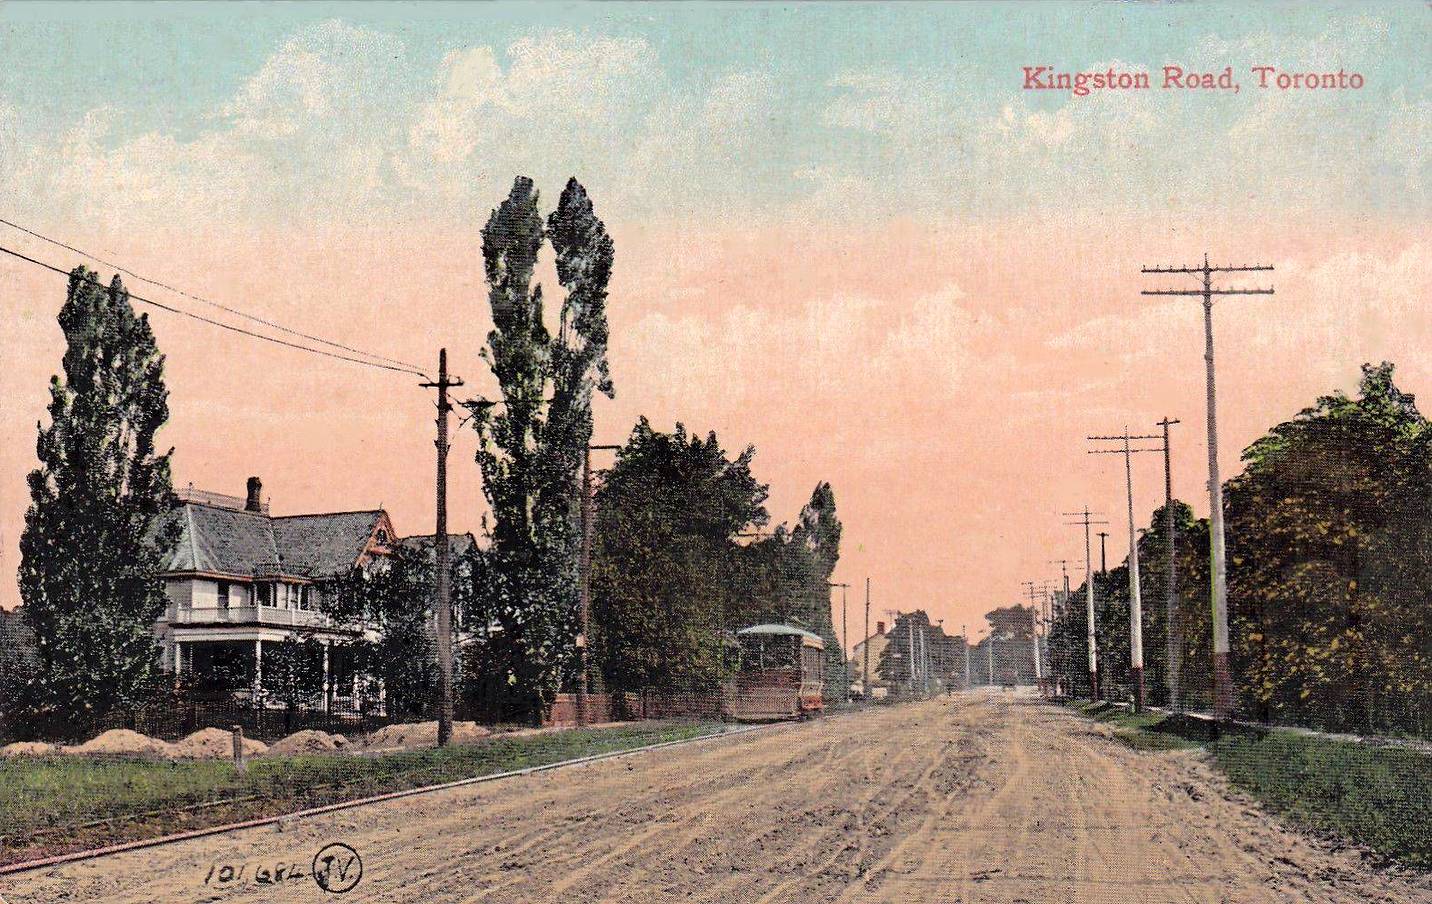 AA POSTCARD - TORONTO - KINGSTONE ROAD - STREETCAR ON SIDE - HOMES - LOOKS LIKE COUNTRY ROAD - TINTED - 1910s